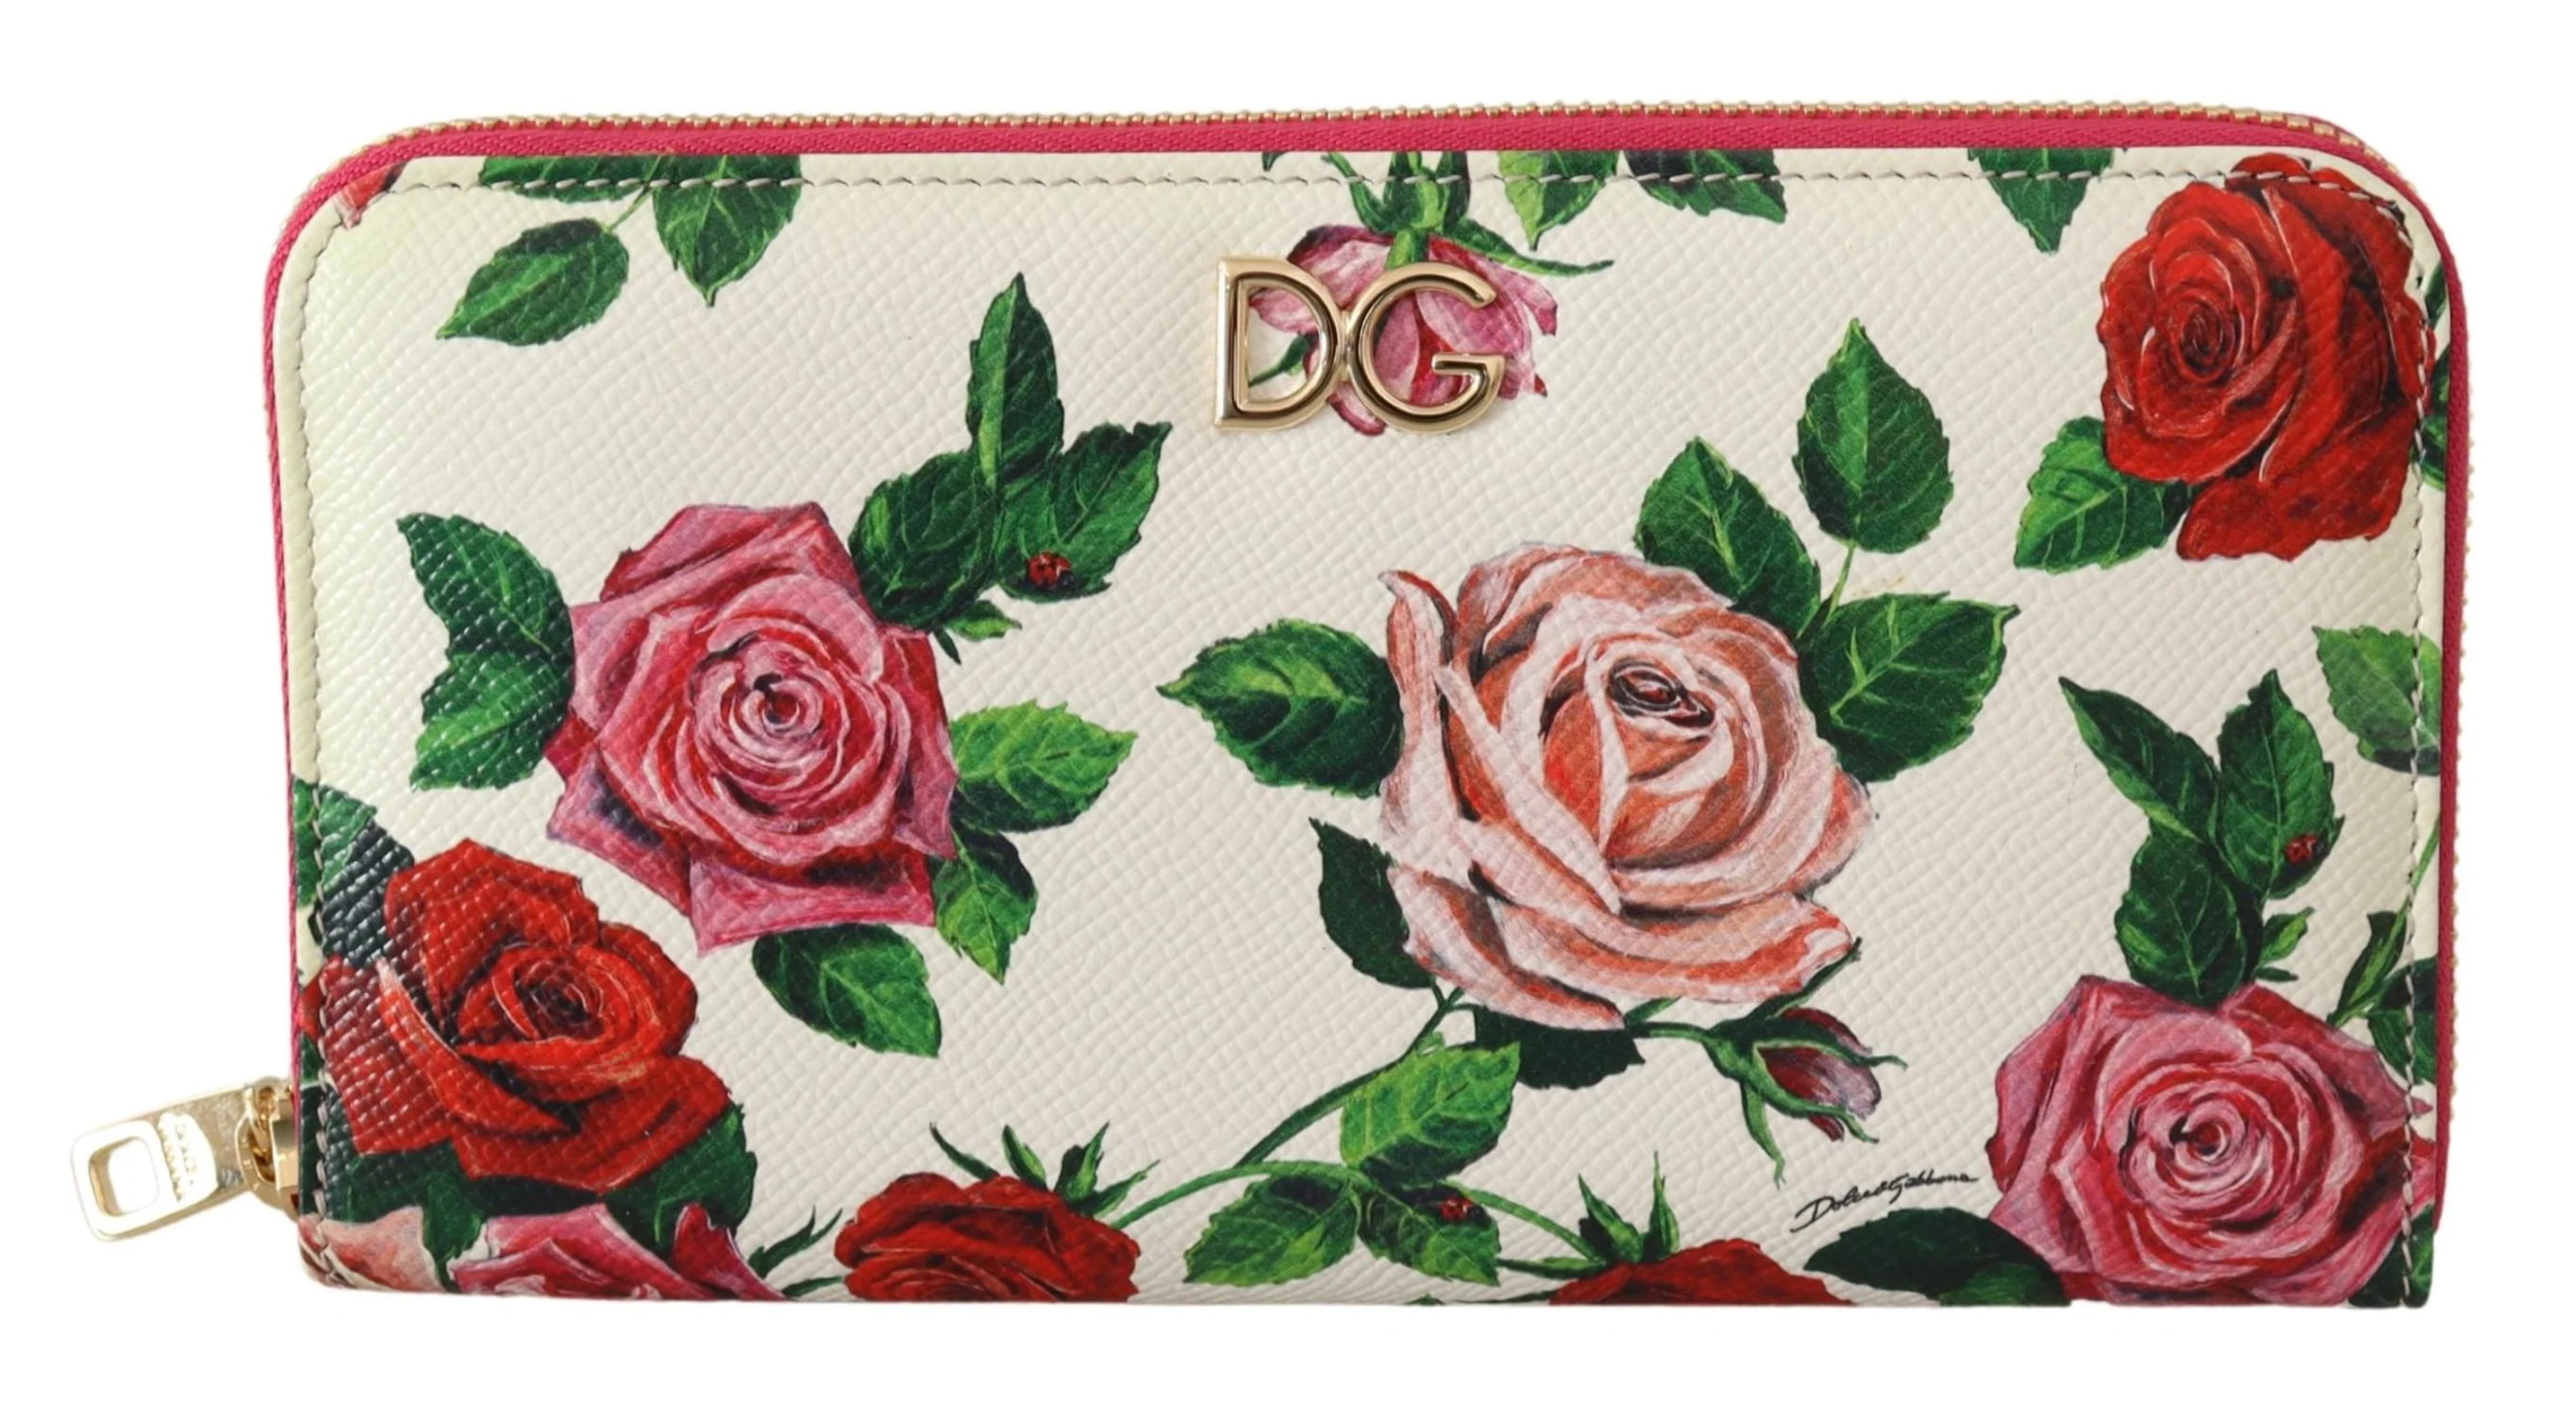 Dolce & Gabbana Dg Logo Leather Card Case in Pink